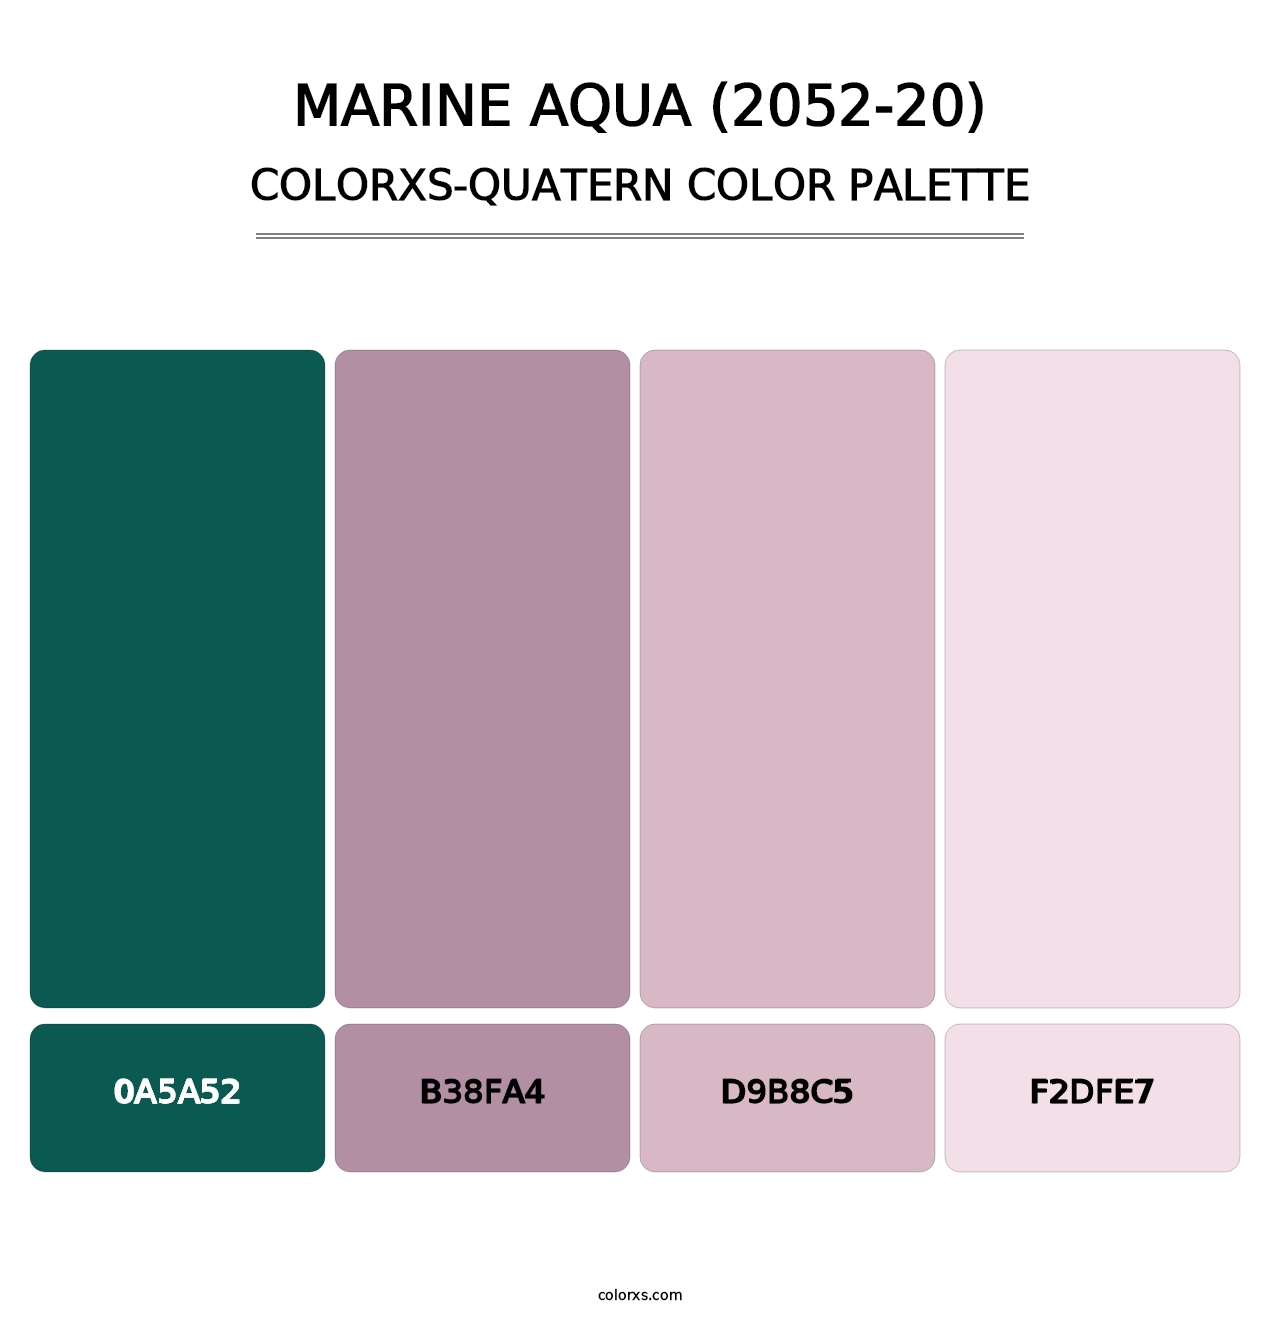 Marine Aqua (2052-20) - Colorxs Quatern Palette